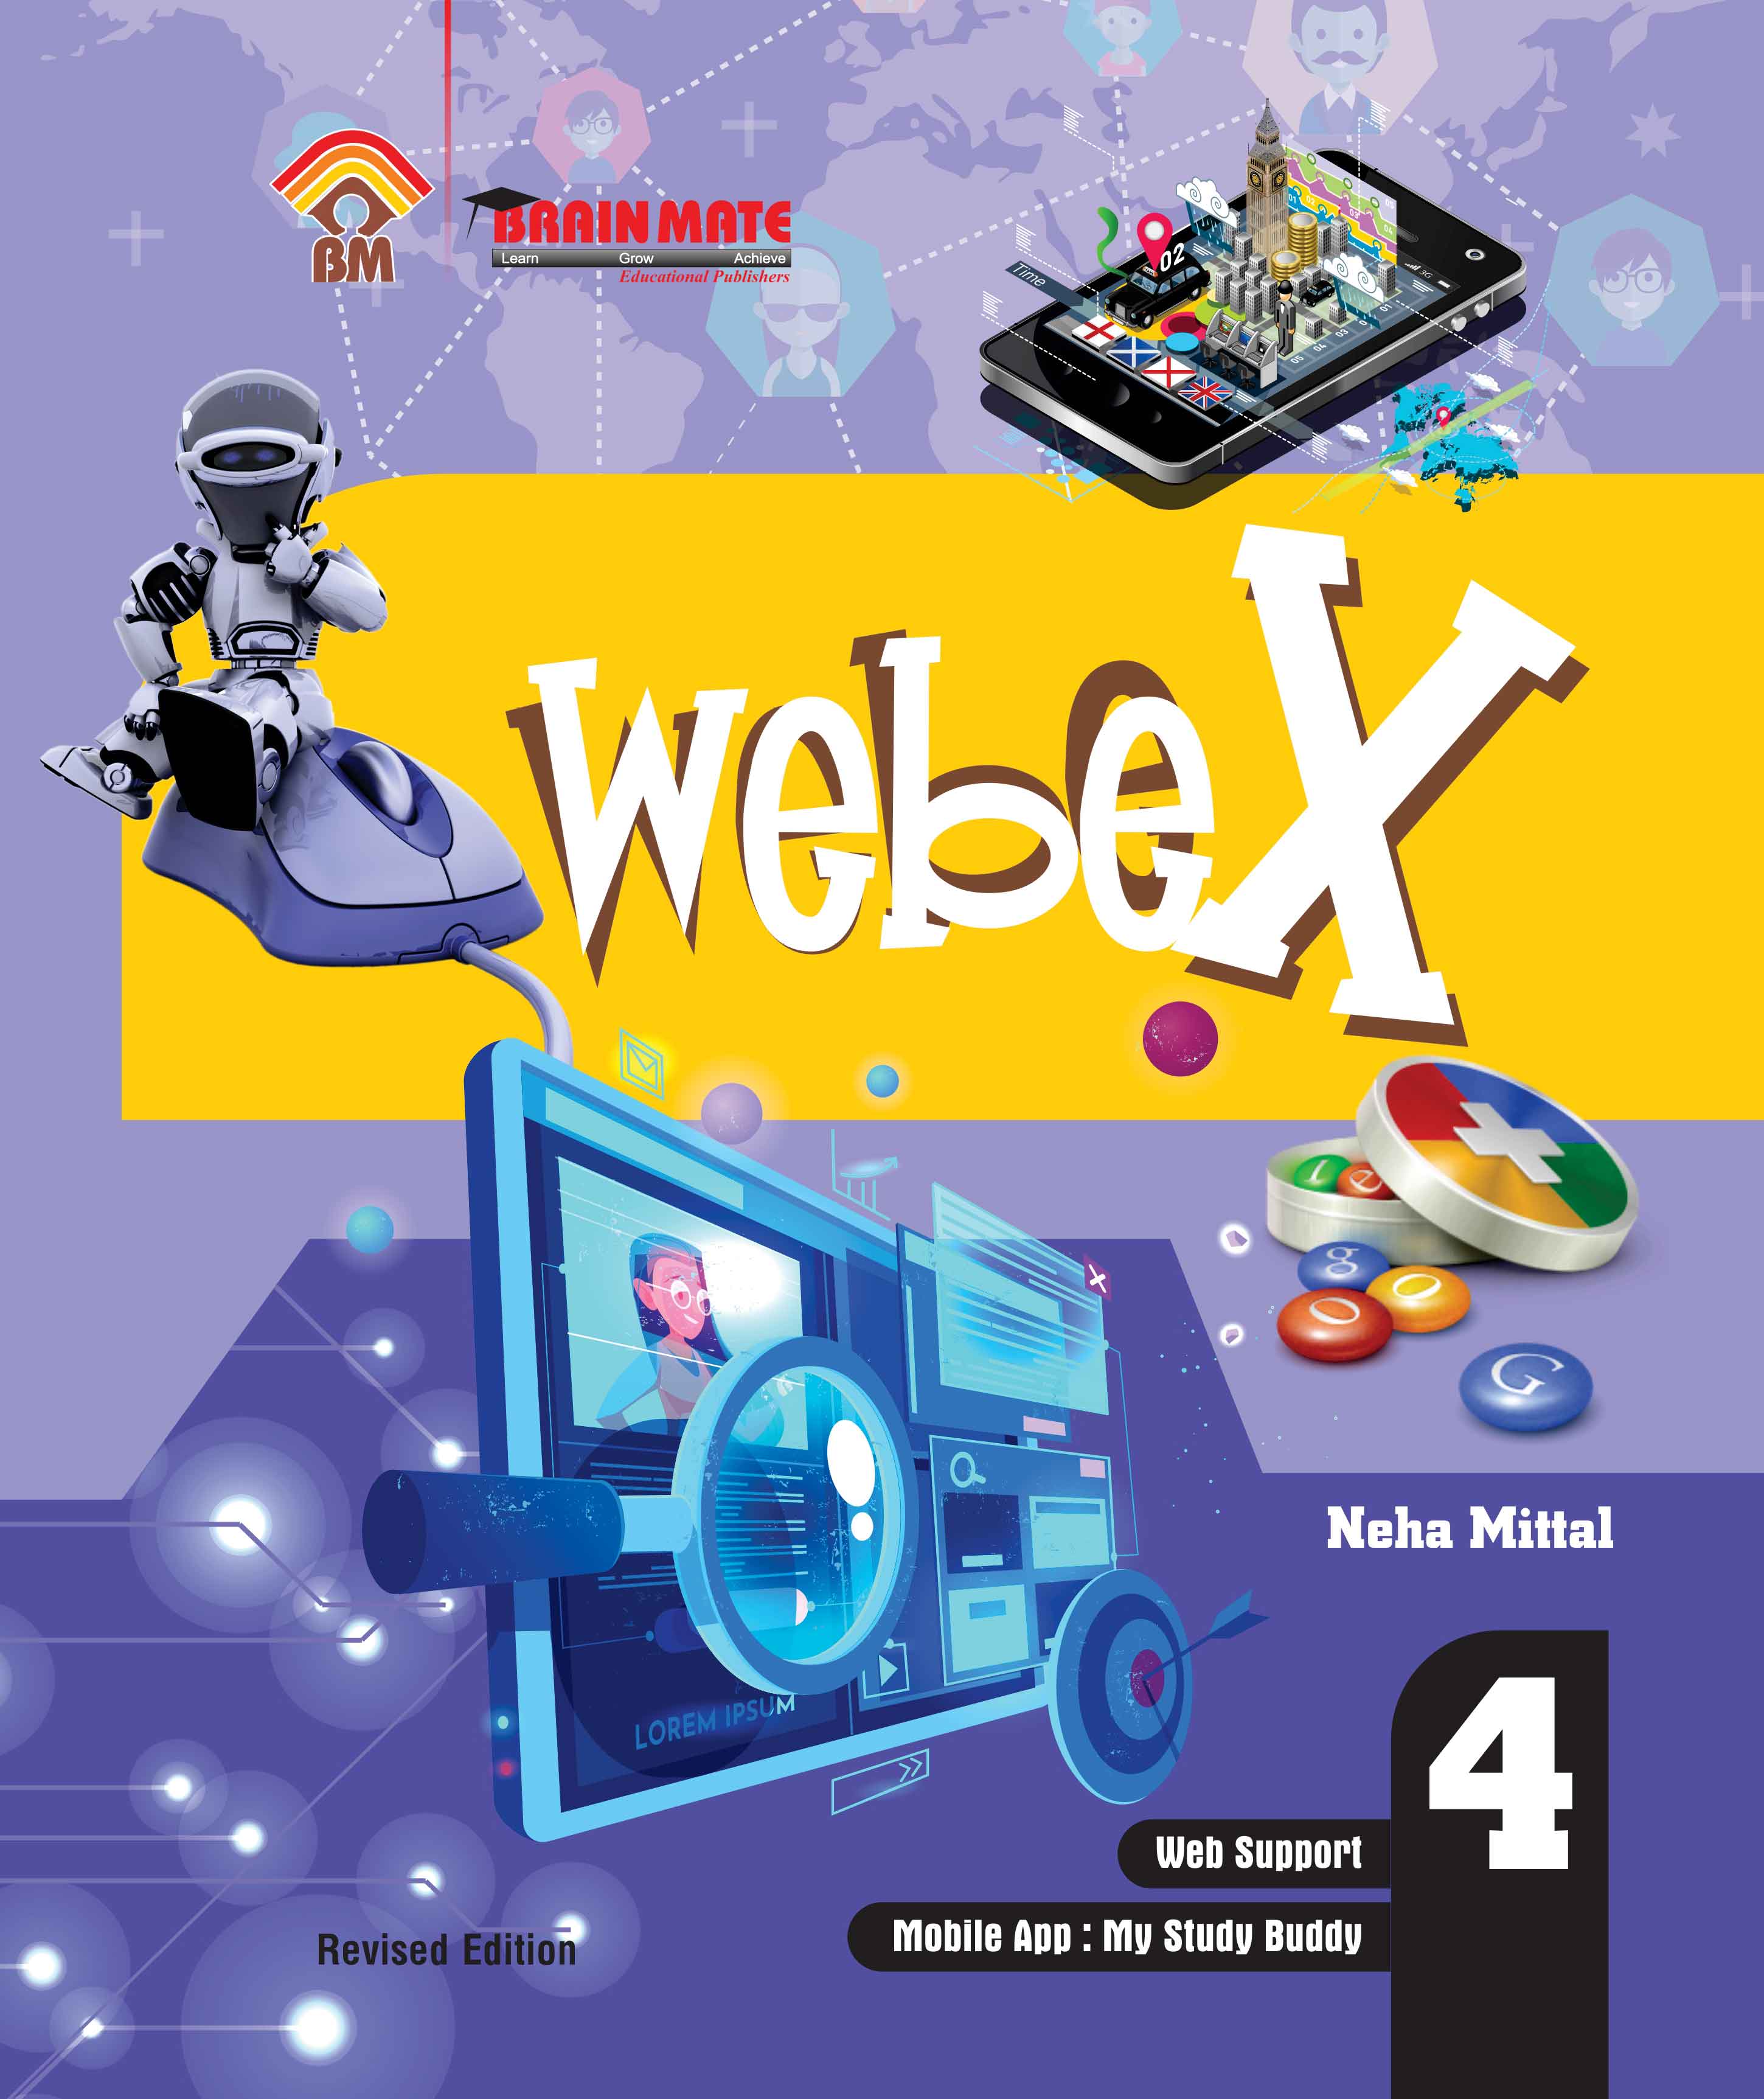 brainmate of Webex-4